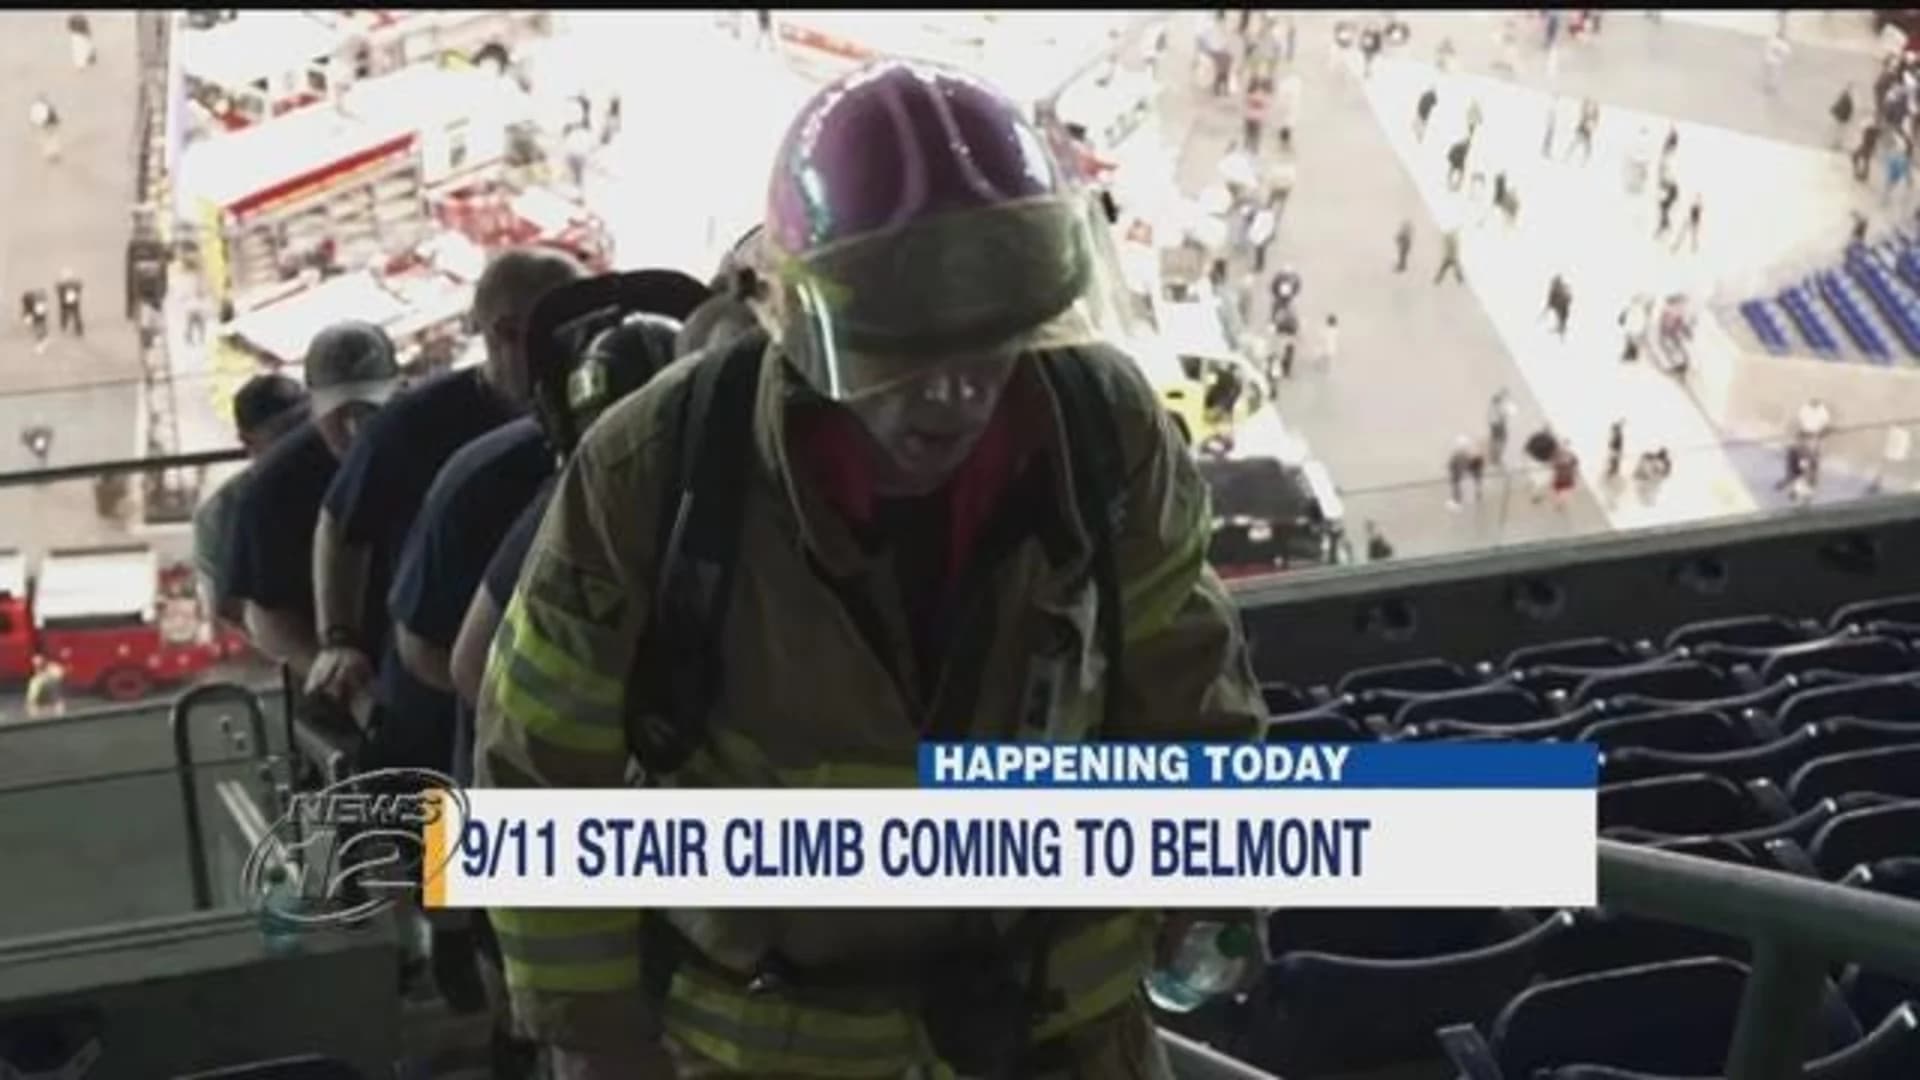 9/11 Stair Climb honoring fallen heroes held at Belmont Park